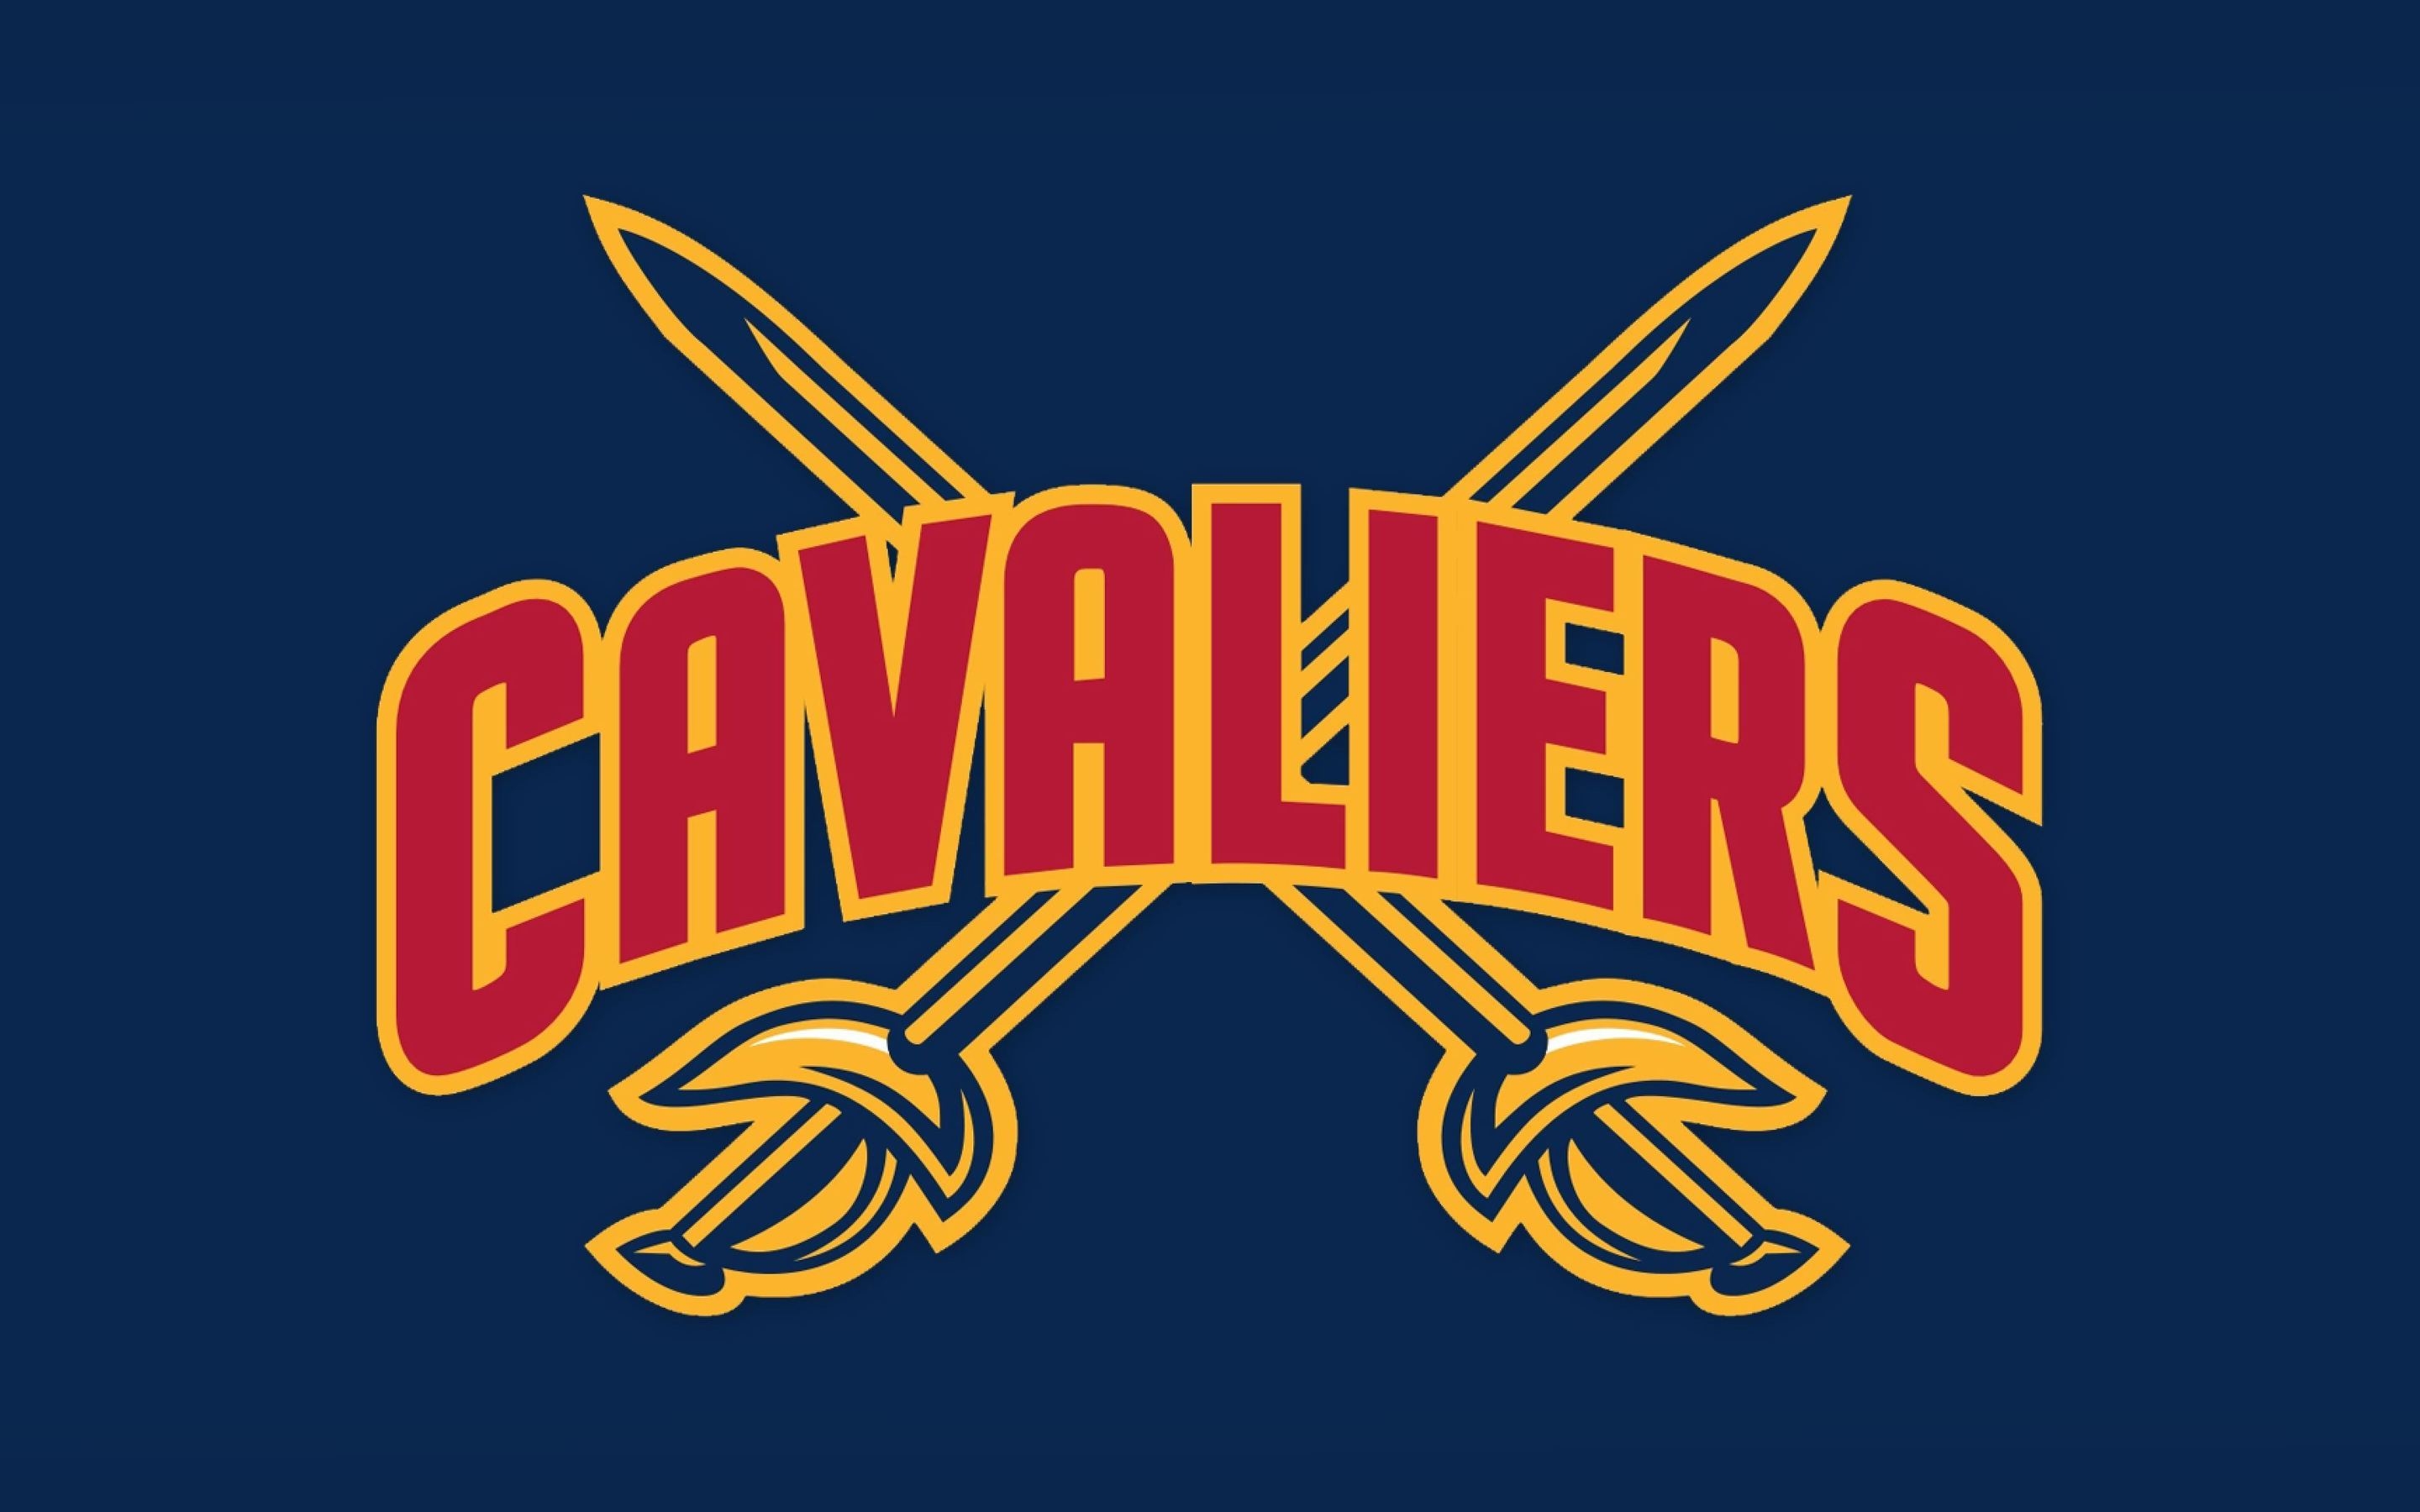 NBA Cleveland Cavaliers Logo for 2880 x 1800 Retina Display resolution